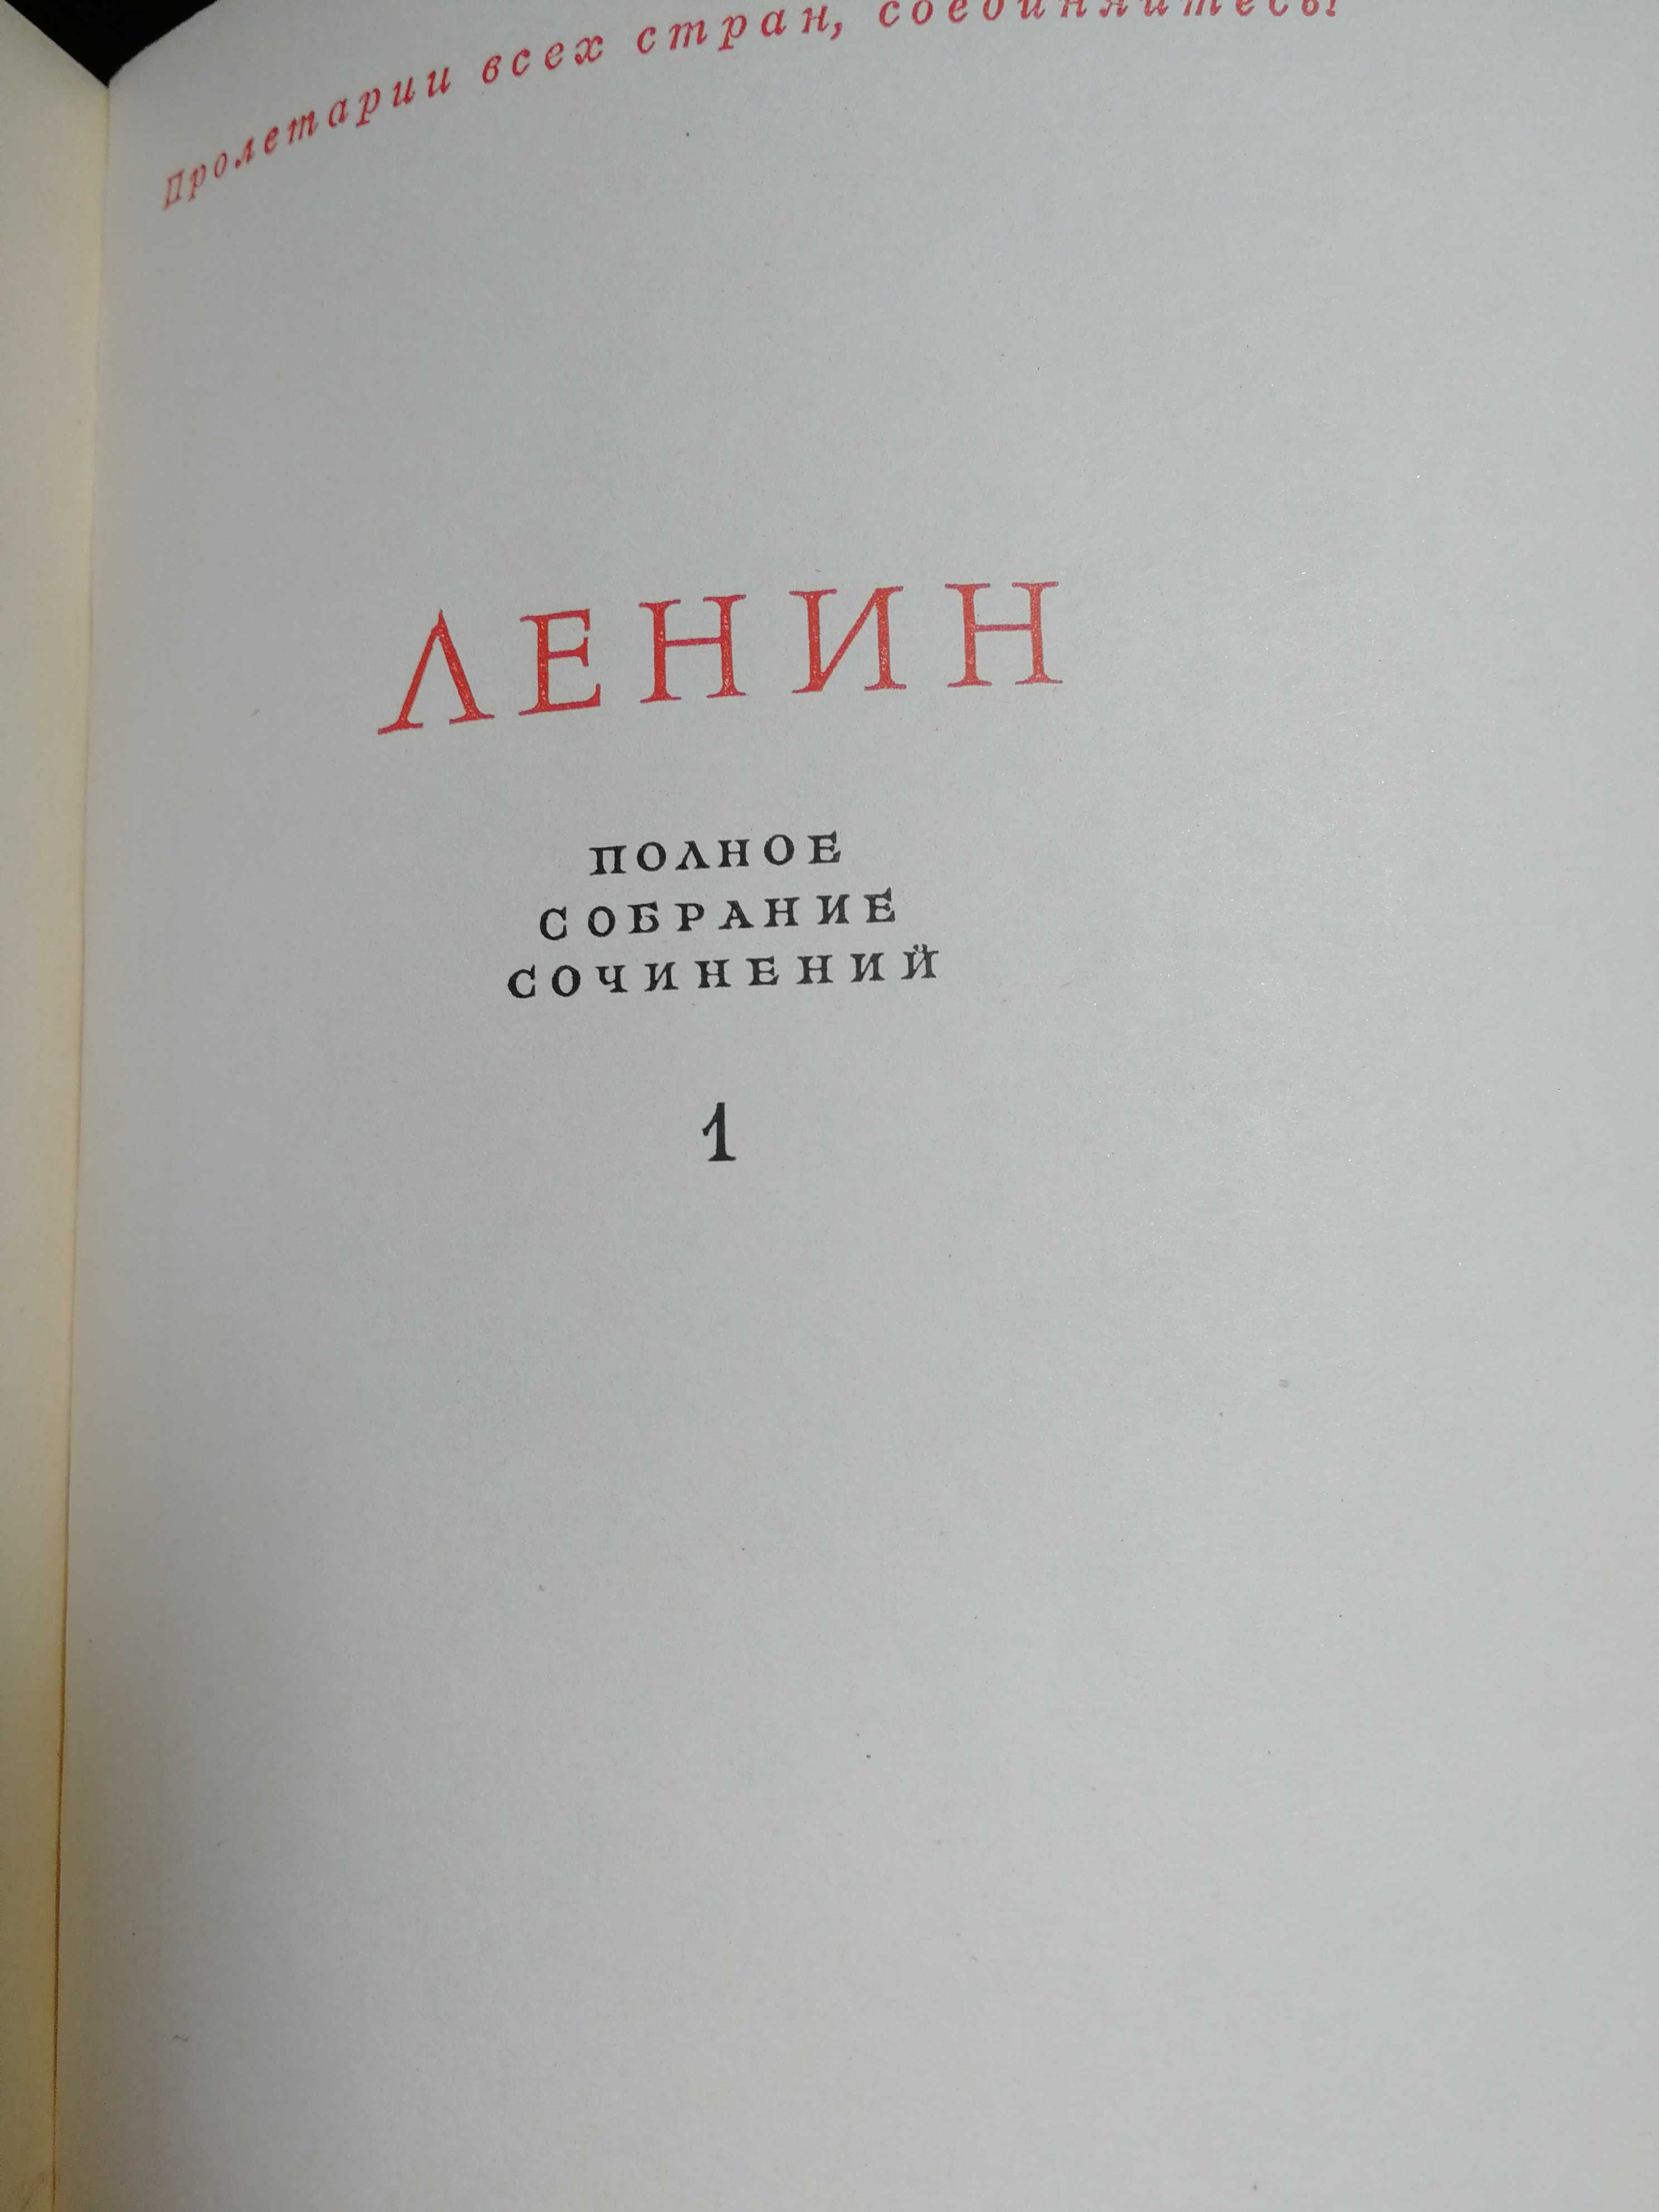 Ленин. Собрание сочинений. Некомплект 1,5,6,7,9,10 тома. 1958 год изд.